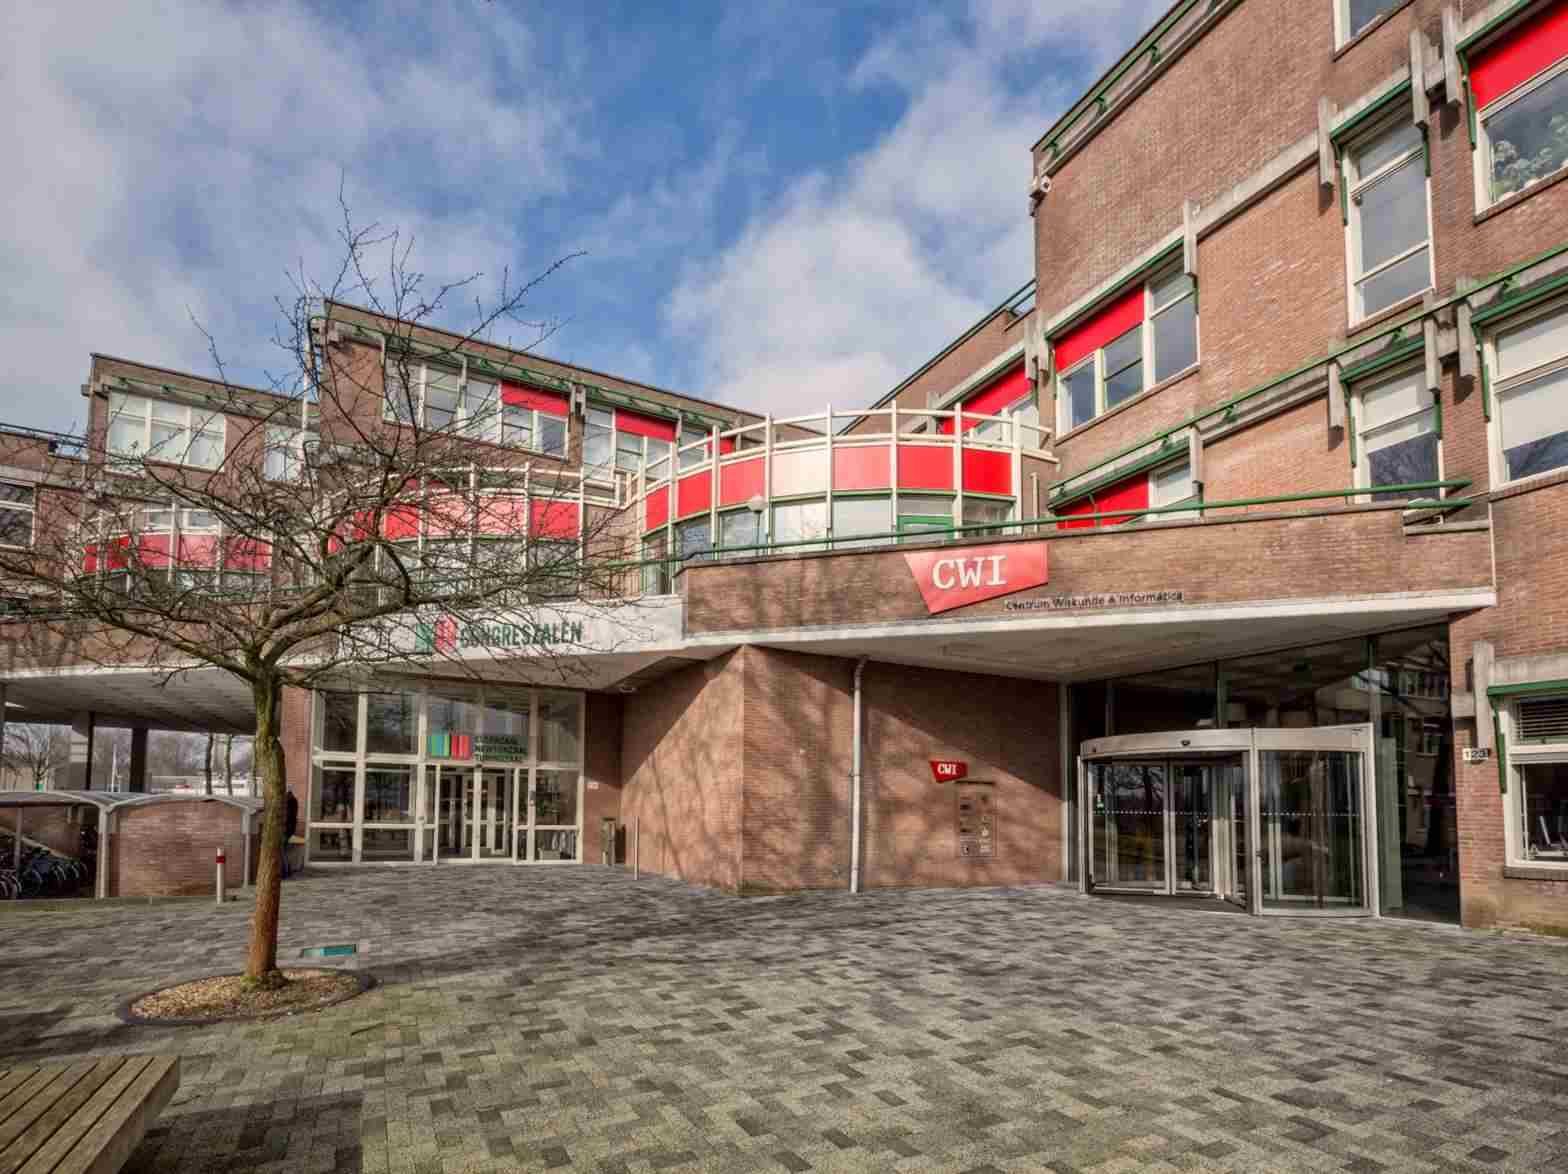 Centrum Wiskunde & Informatica(CWI) - place where Guido Van Rossum created Python